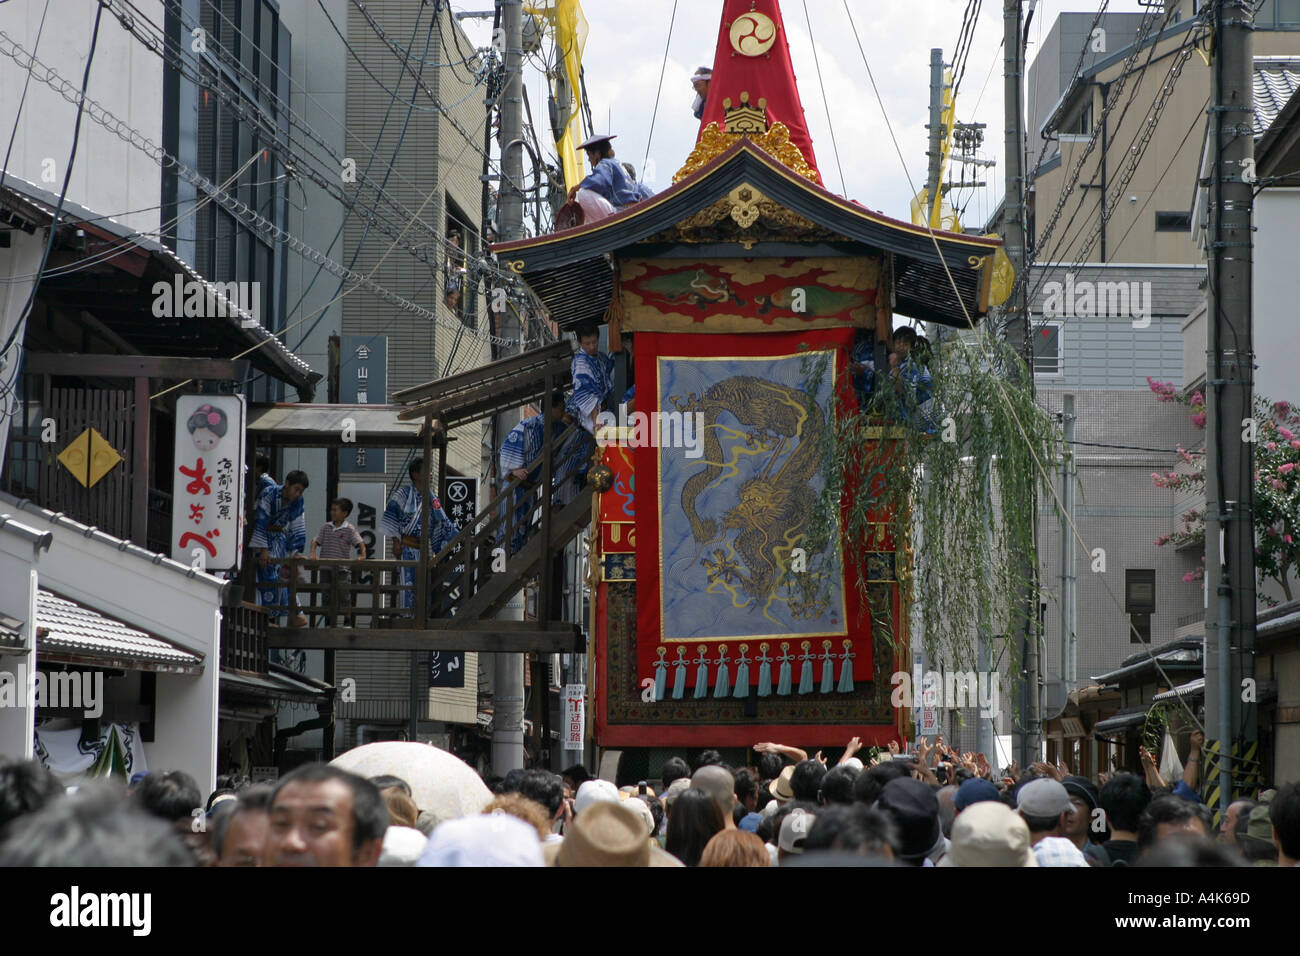 A festival float from the Gion Matsuri makes its way through the narrow backstreets of Gion Japan Stock Photo